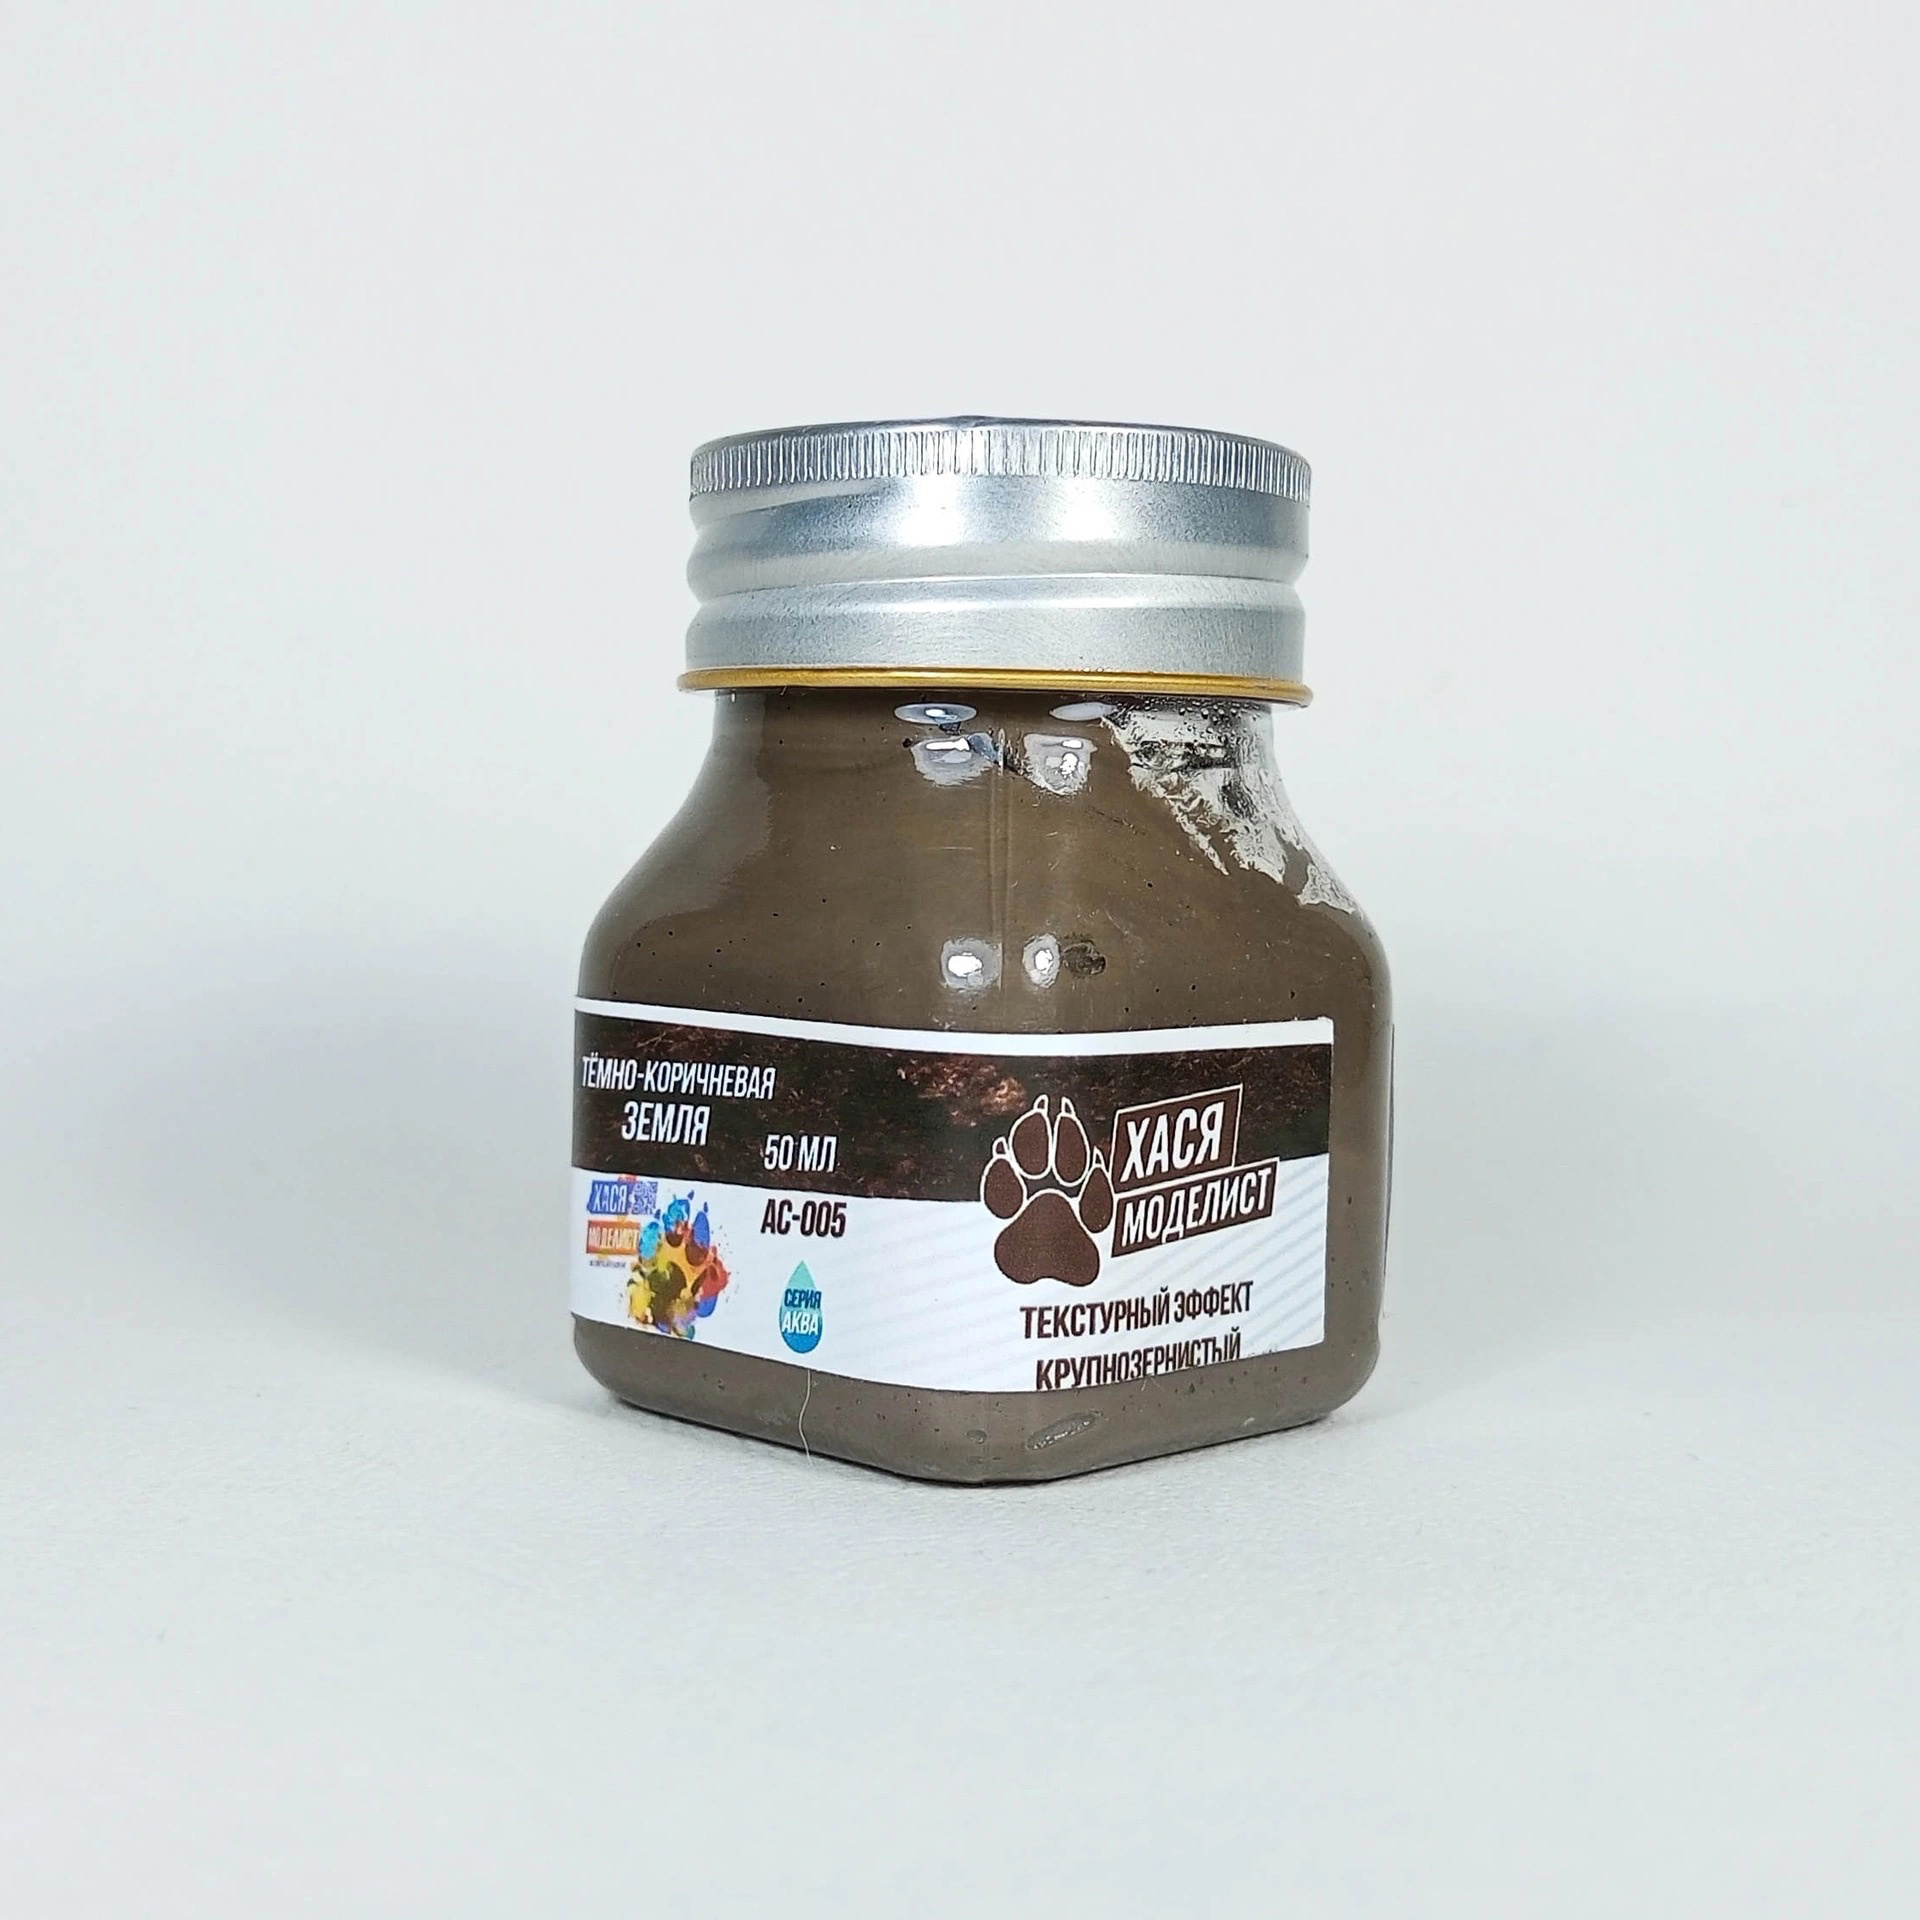 AS005 Hasya Modeler Acrylic mixture, dark brown Russian earth, coarse-grained, 50 ml